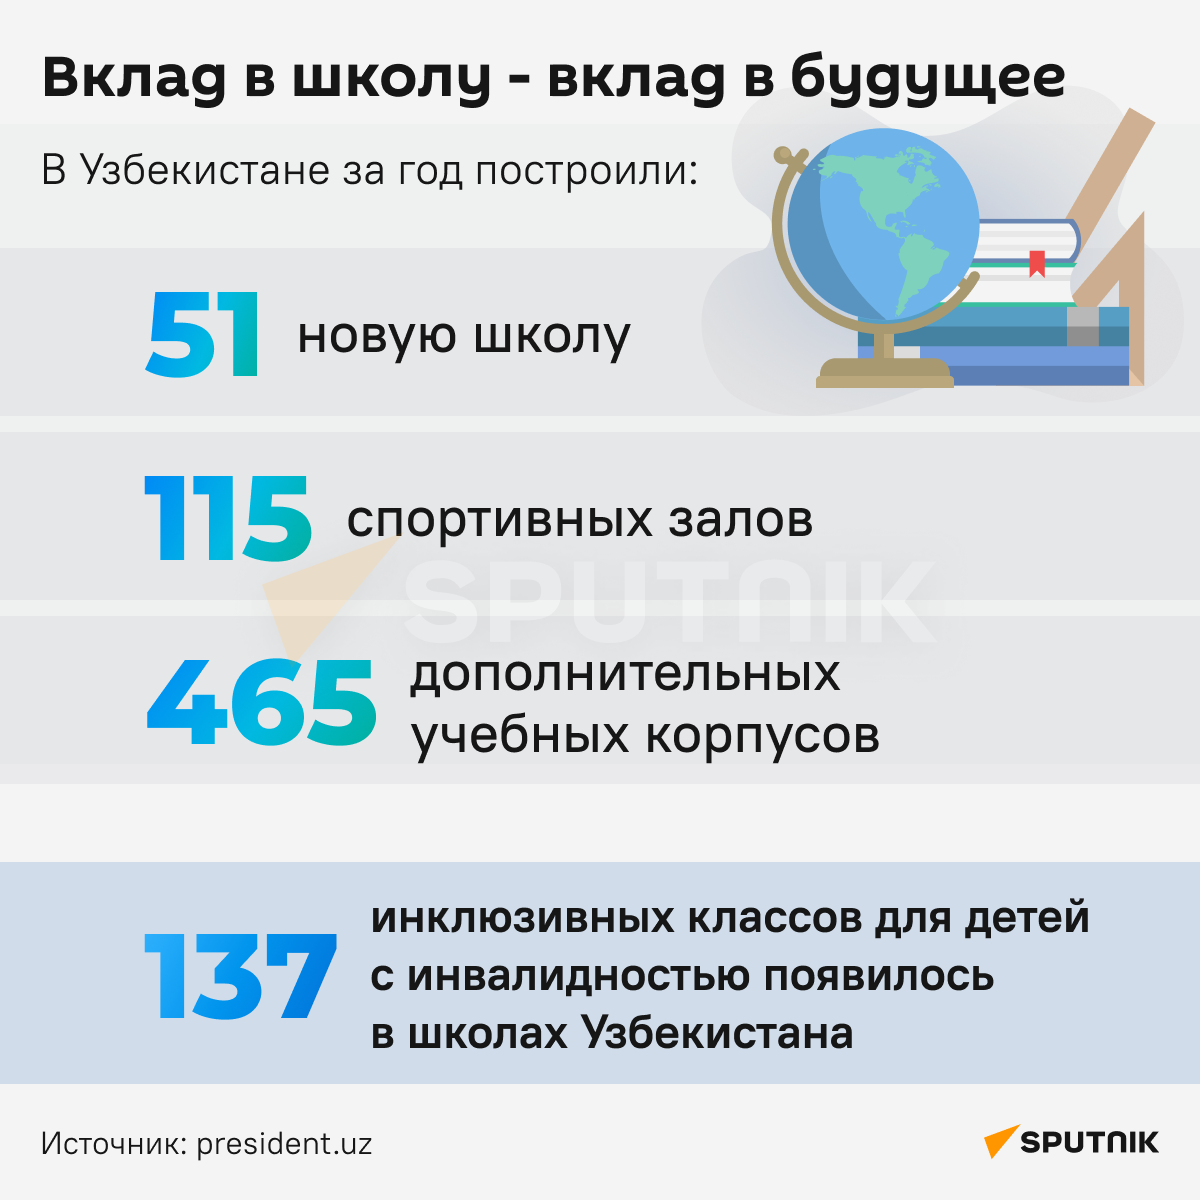 Школы в Узбекистане инфографика - Sputnik Узбекистан